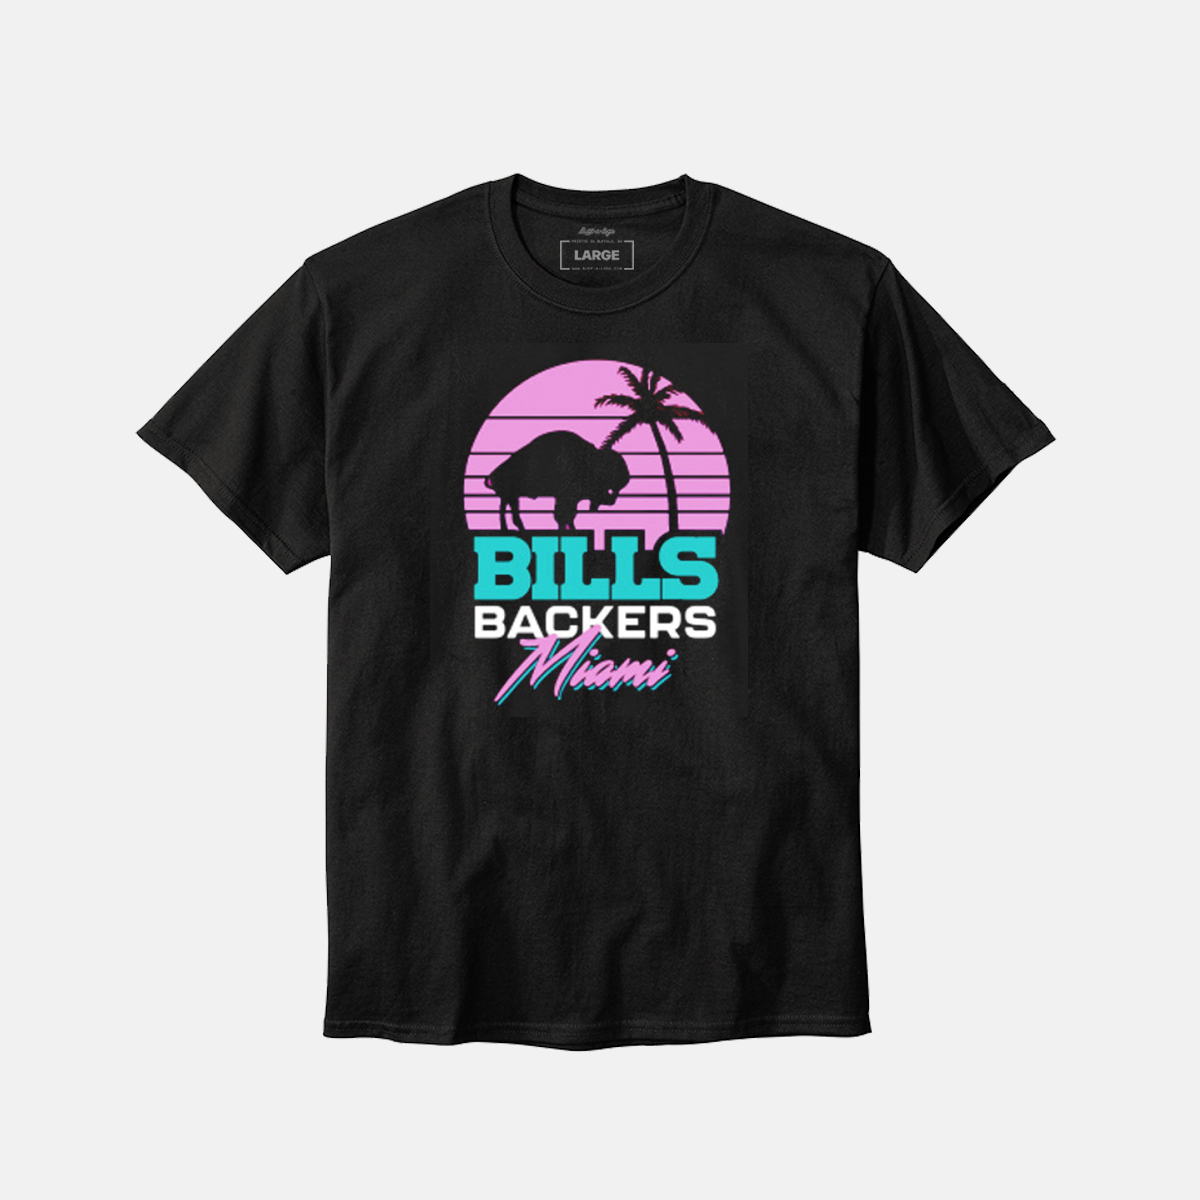 Bills Backers Miami Edition - Buff-a-logo